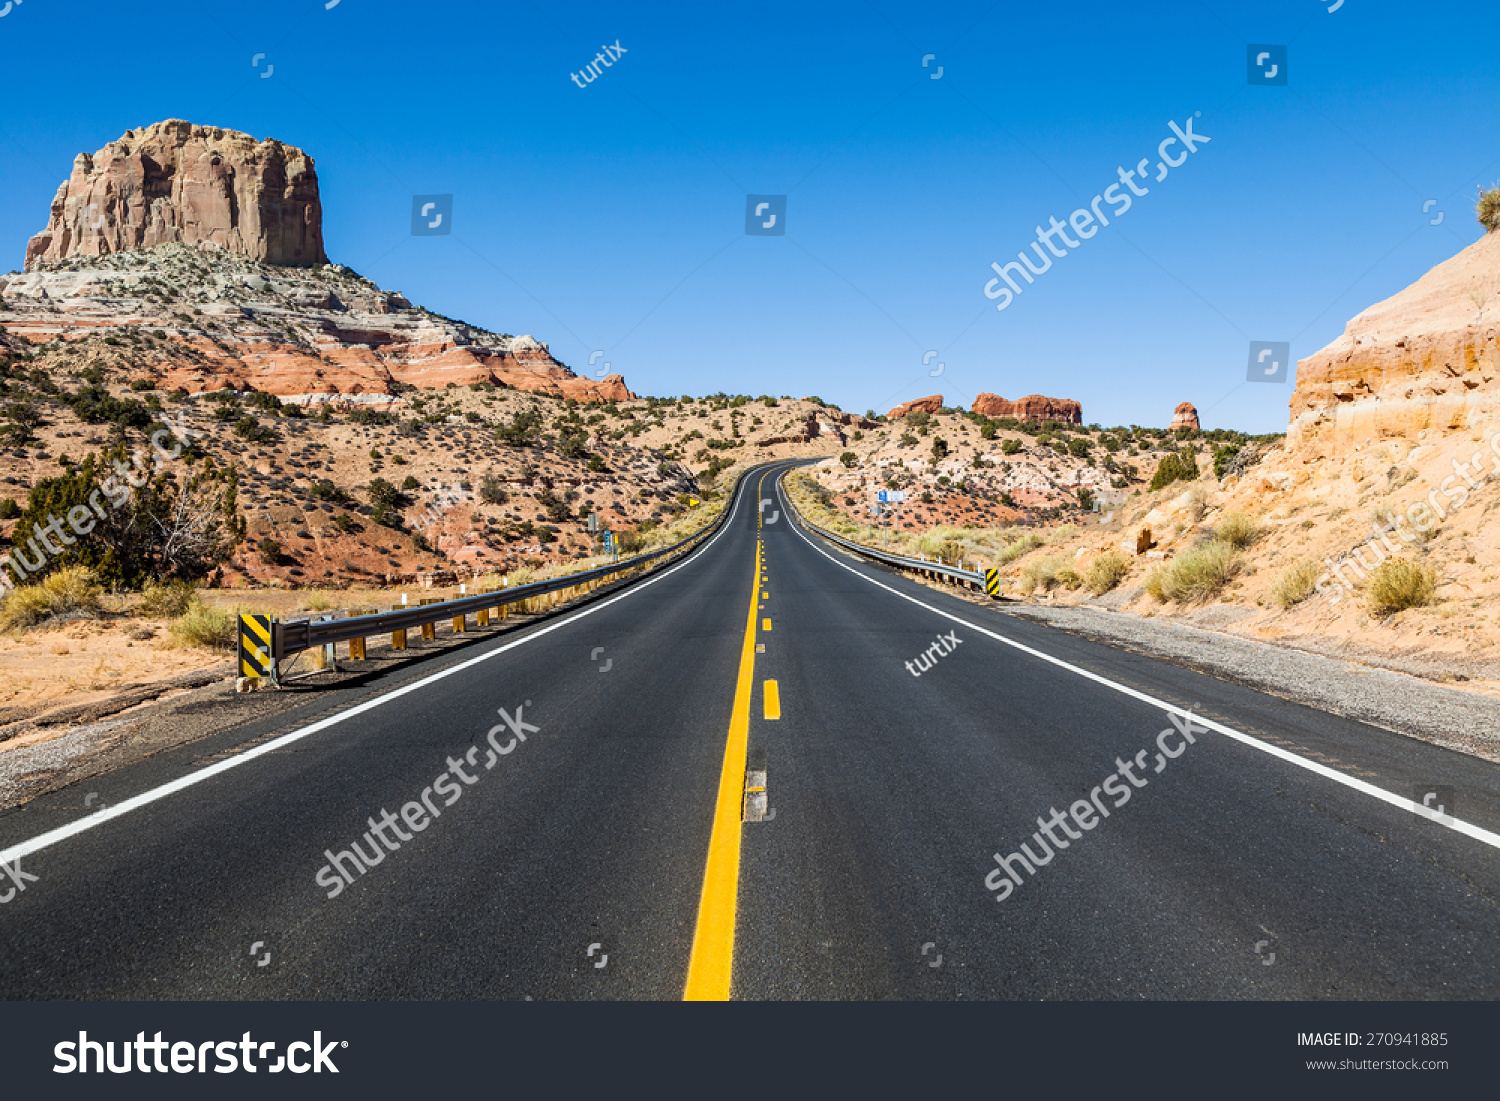 Road trip in Arizona desert, USA #270941885